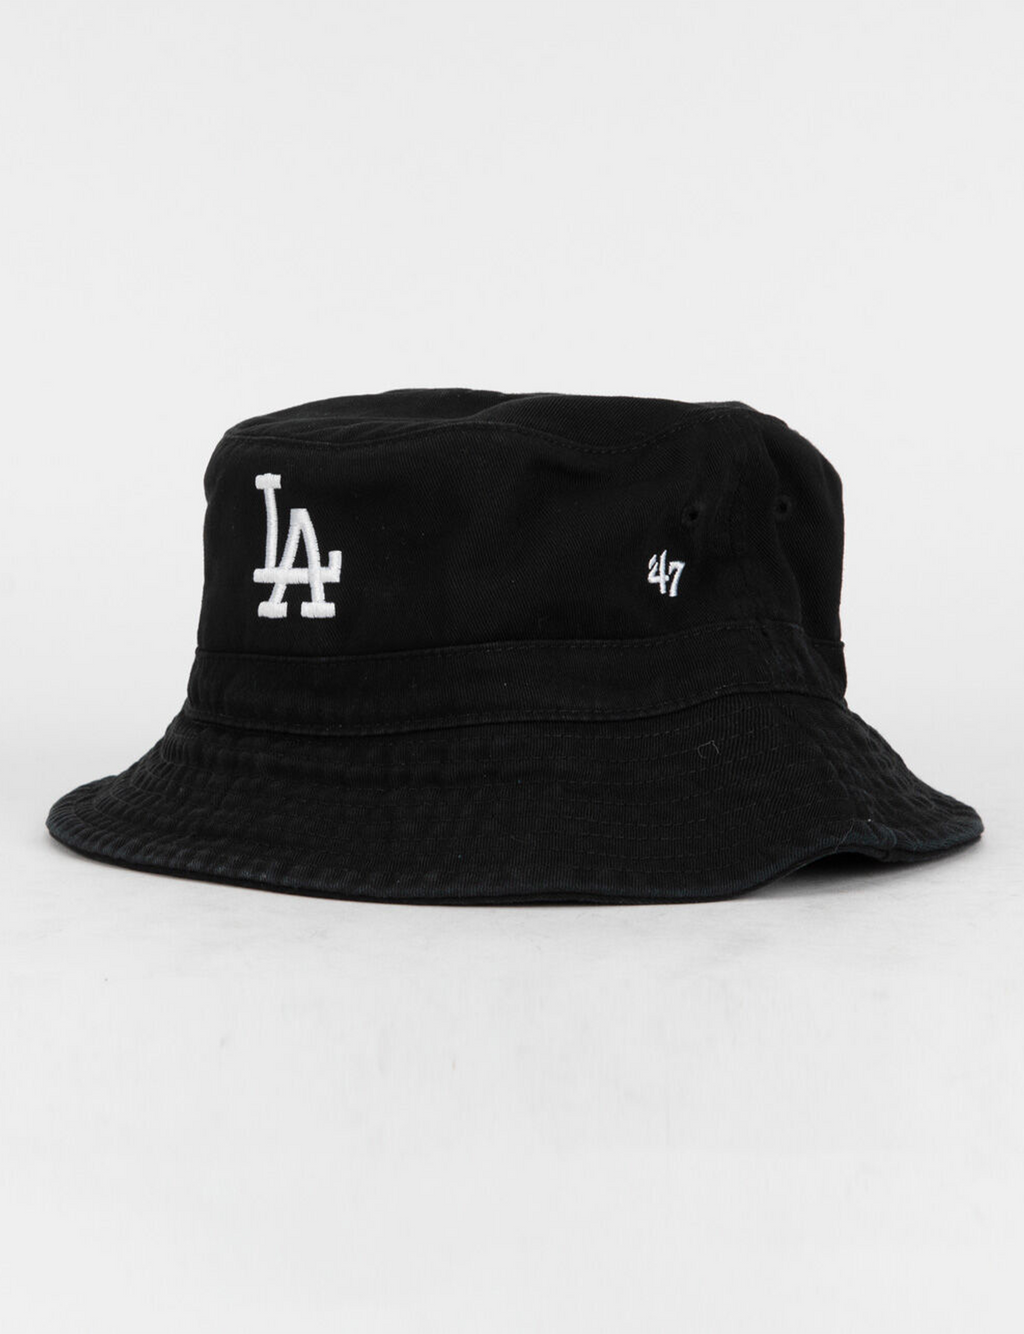 LA Dodgers Bucket Hat, Black/White